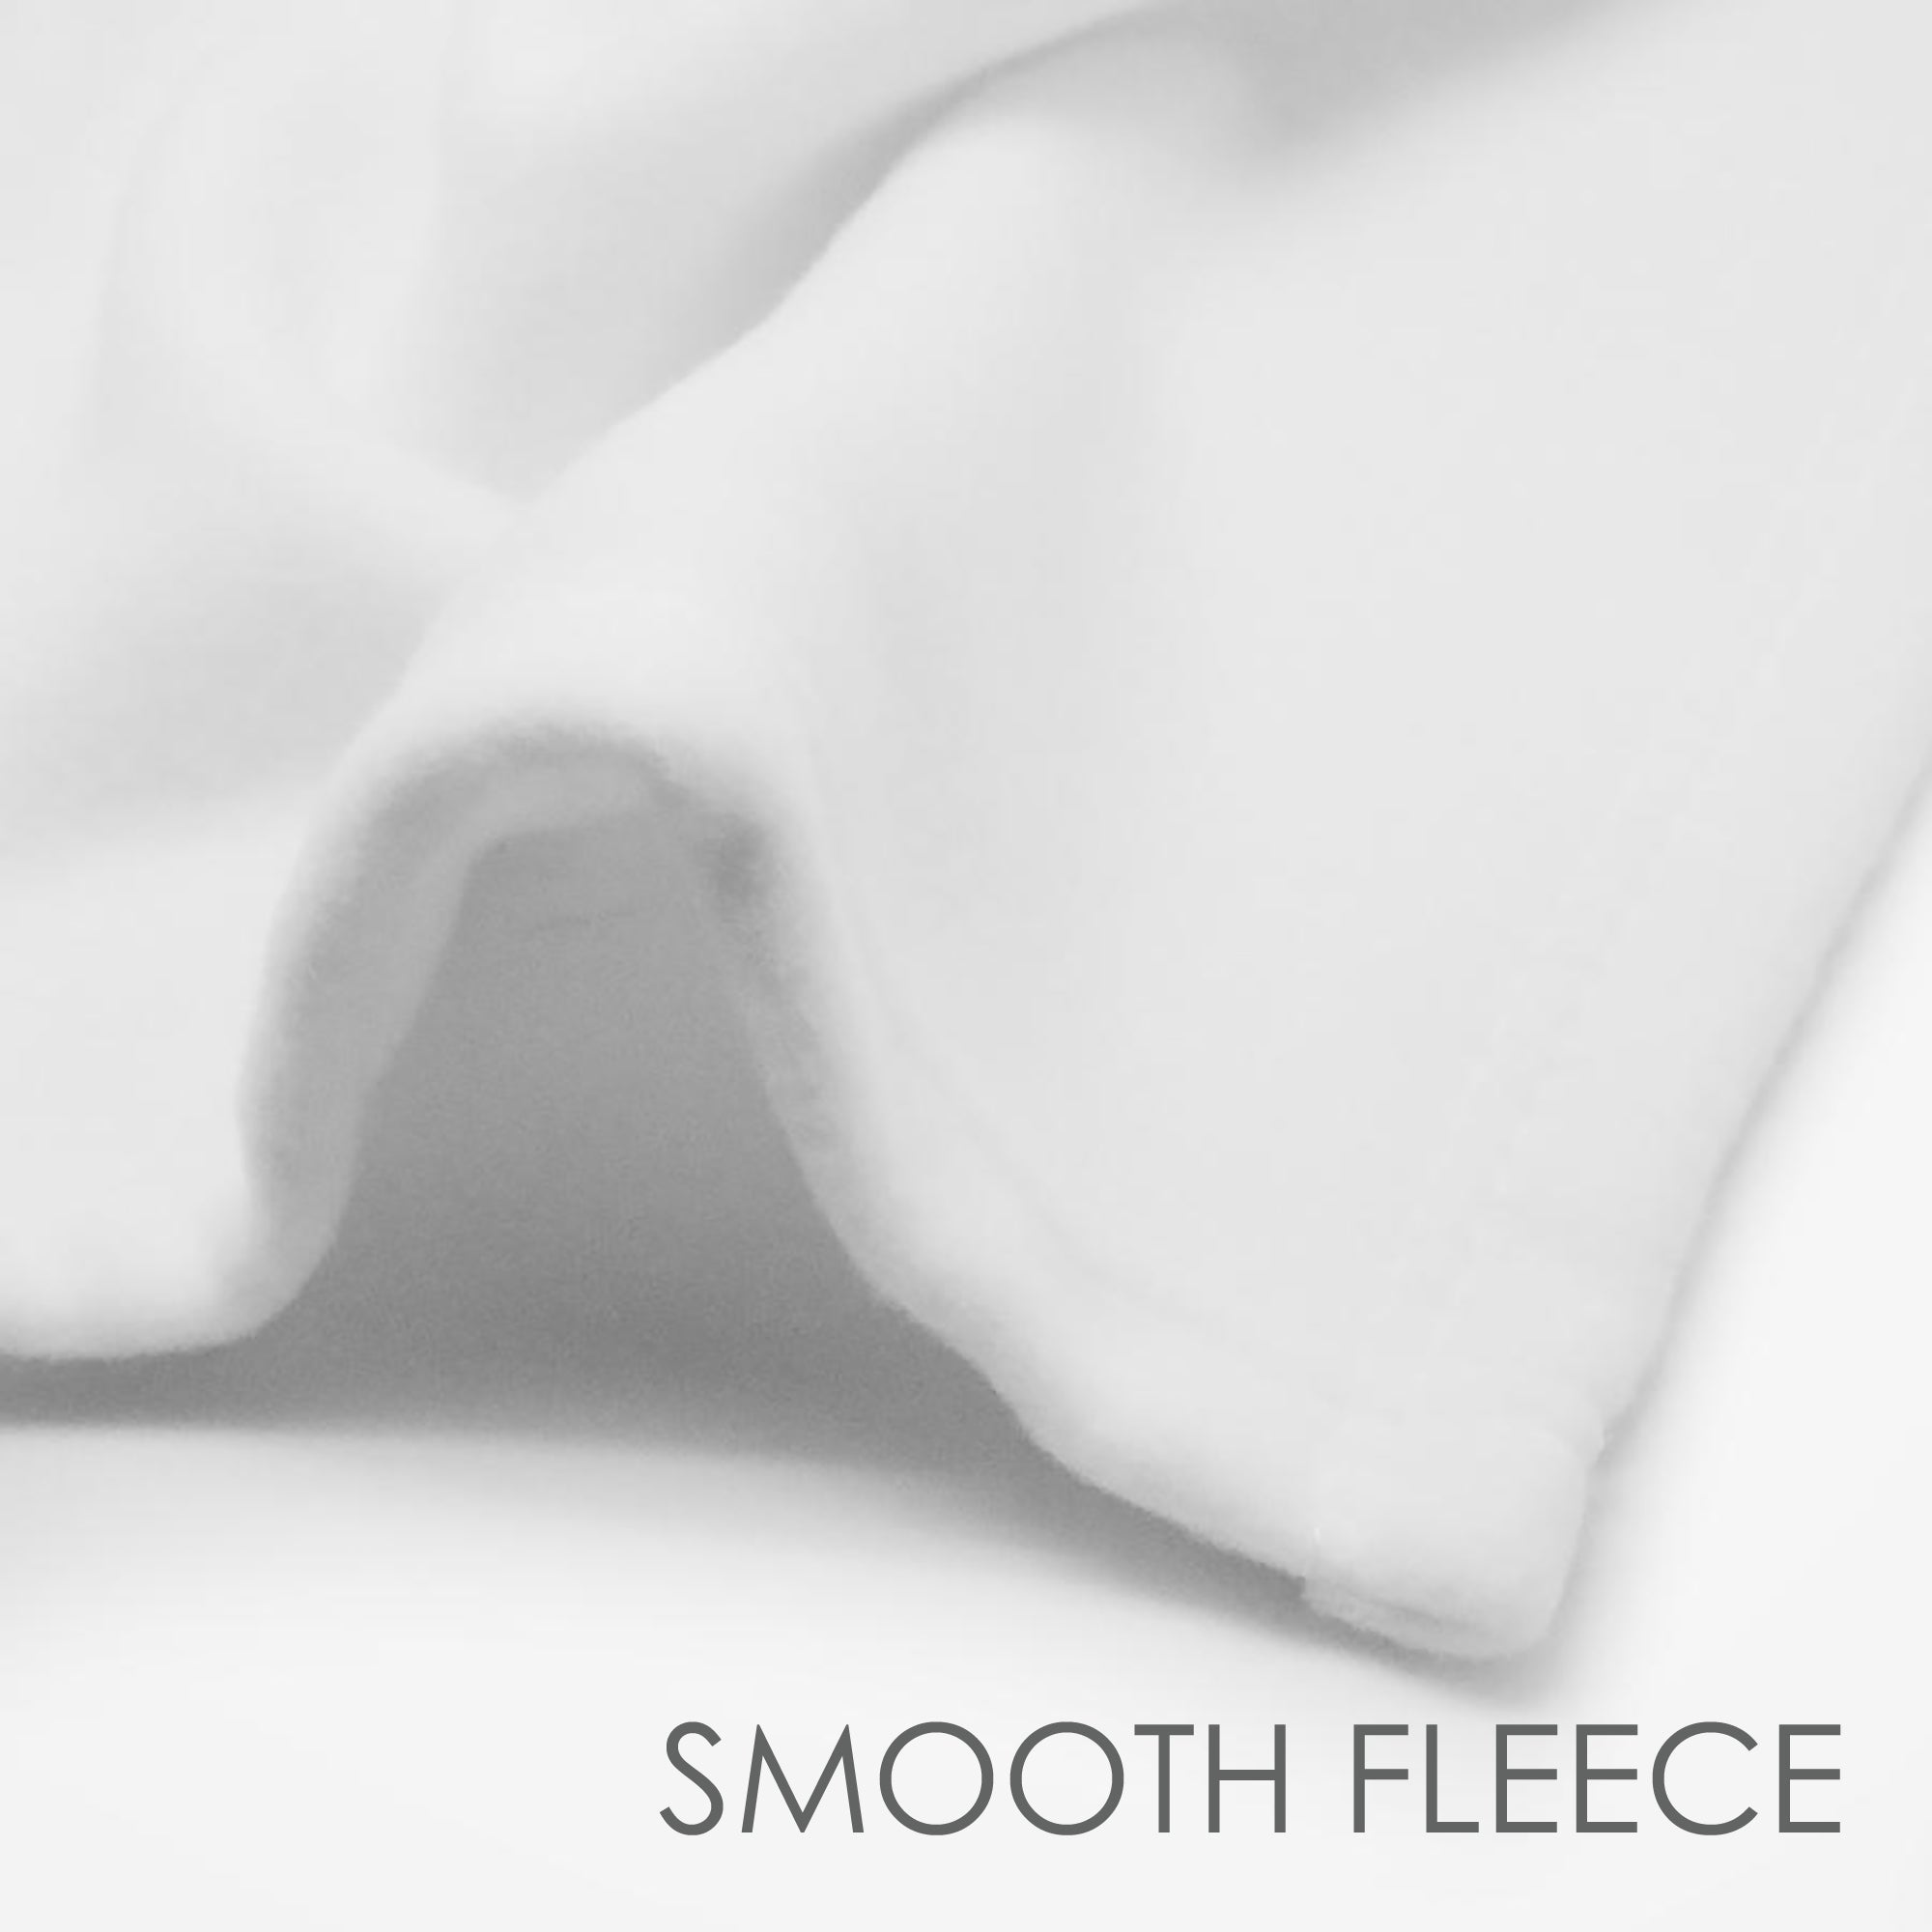 Smooth fleece, Pipsy.com